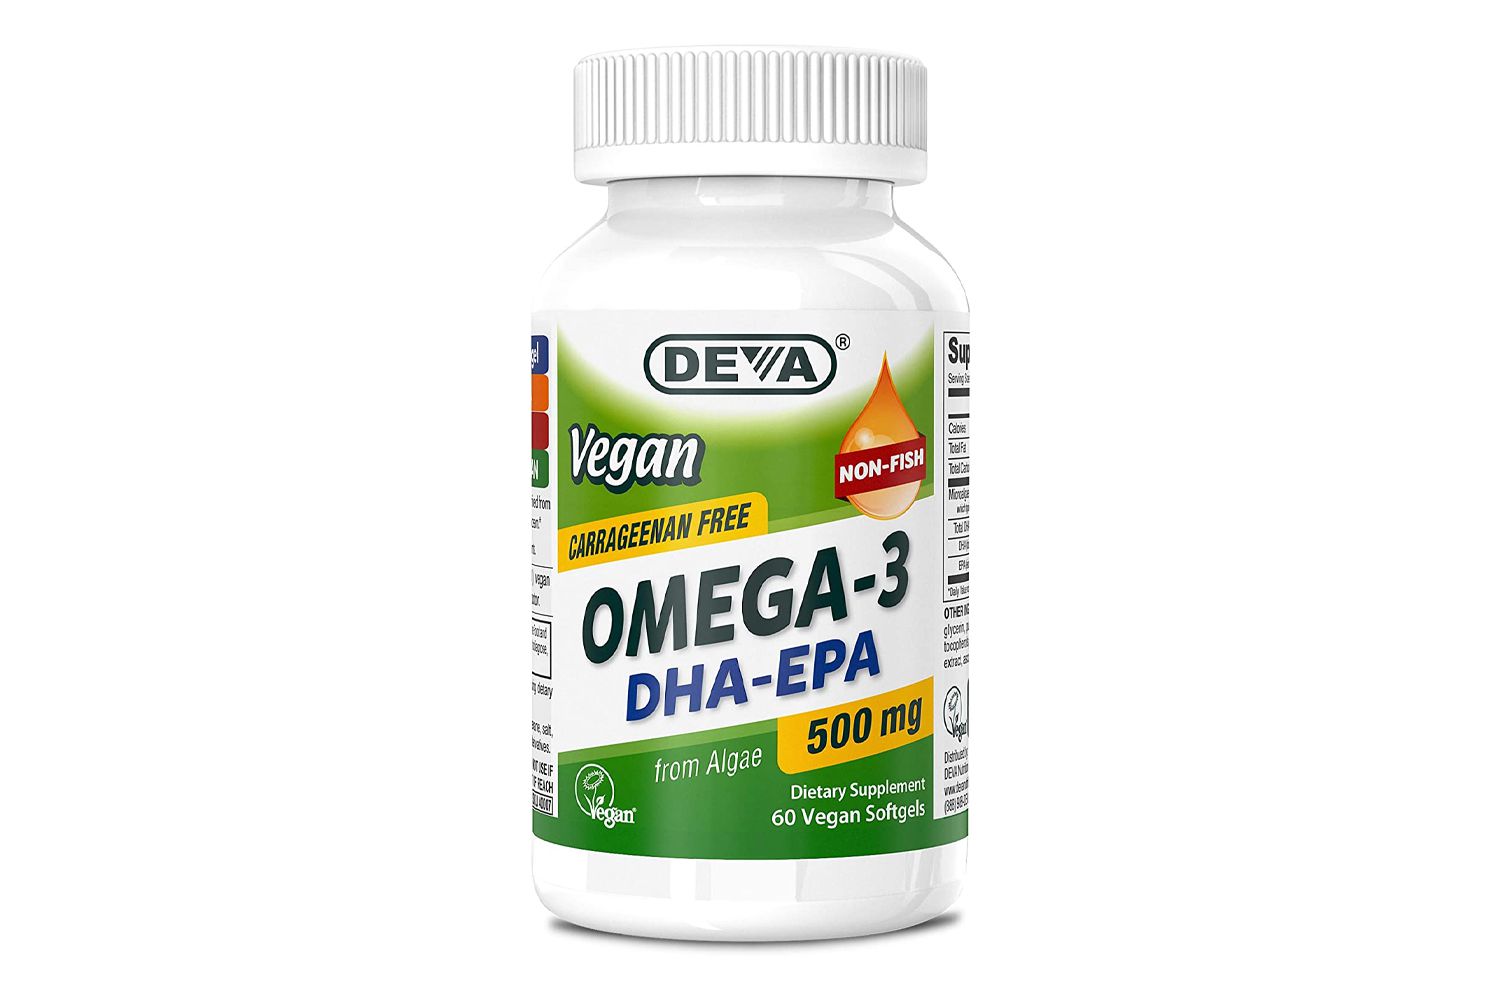 DEVA素食-3 DHA-EPA